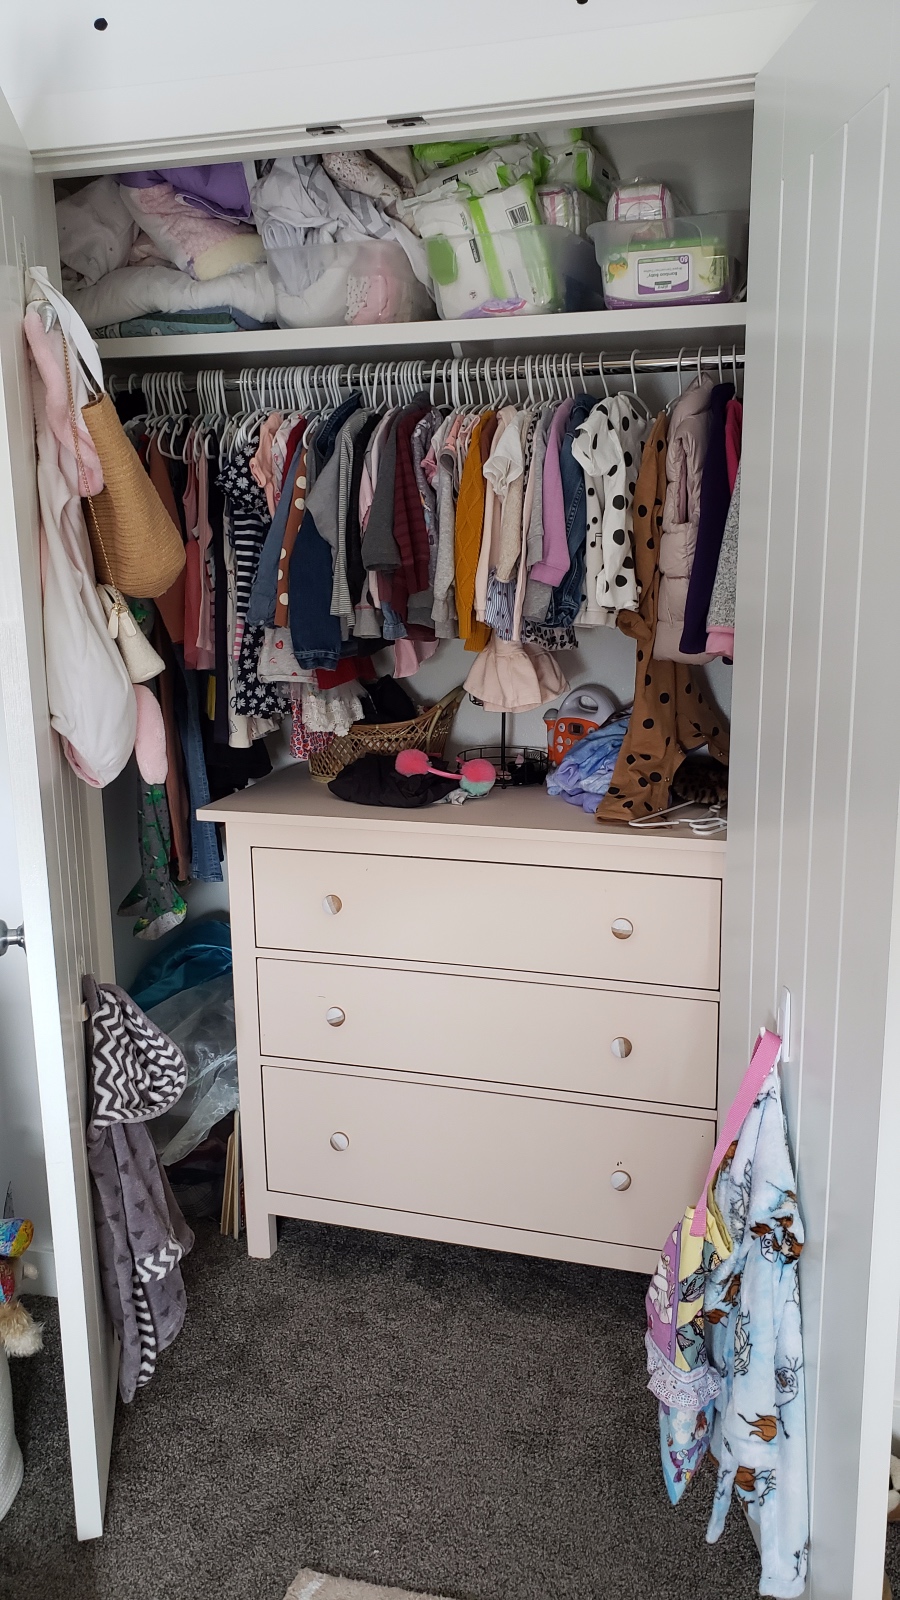 How to build cheap and easy DIY closet shelves  Diy closet shelves, Closet  organization diy, Kids closet organization